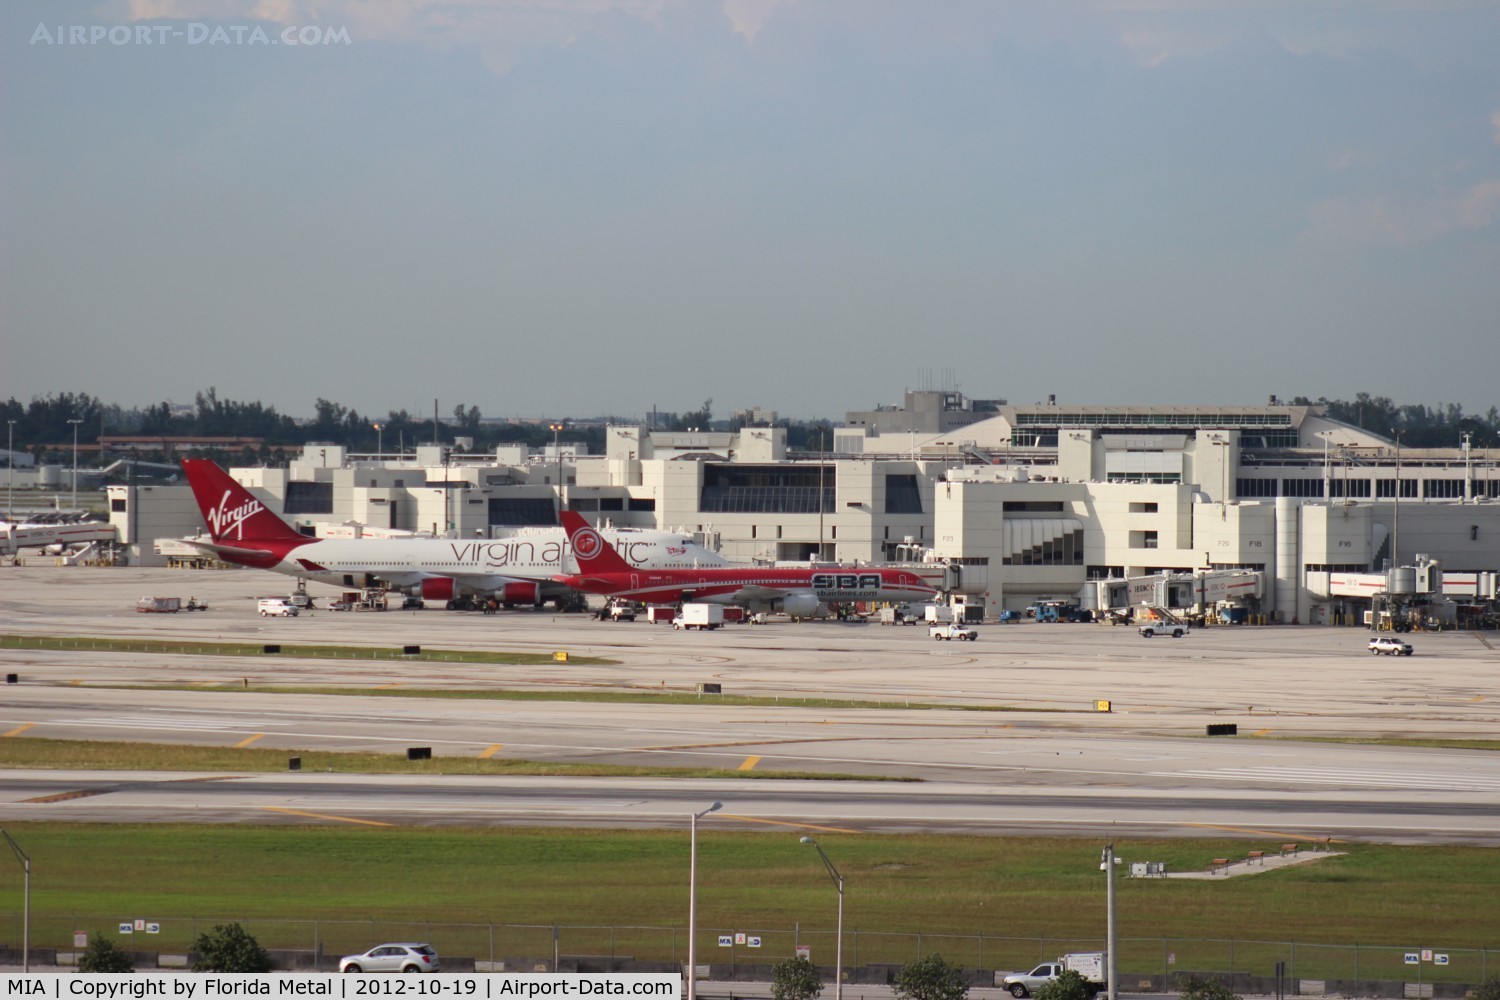 Miami International Airport (MIA) - Santa Barbara and Virgin Atlantic at Miami